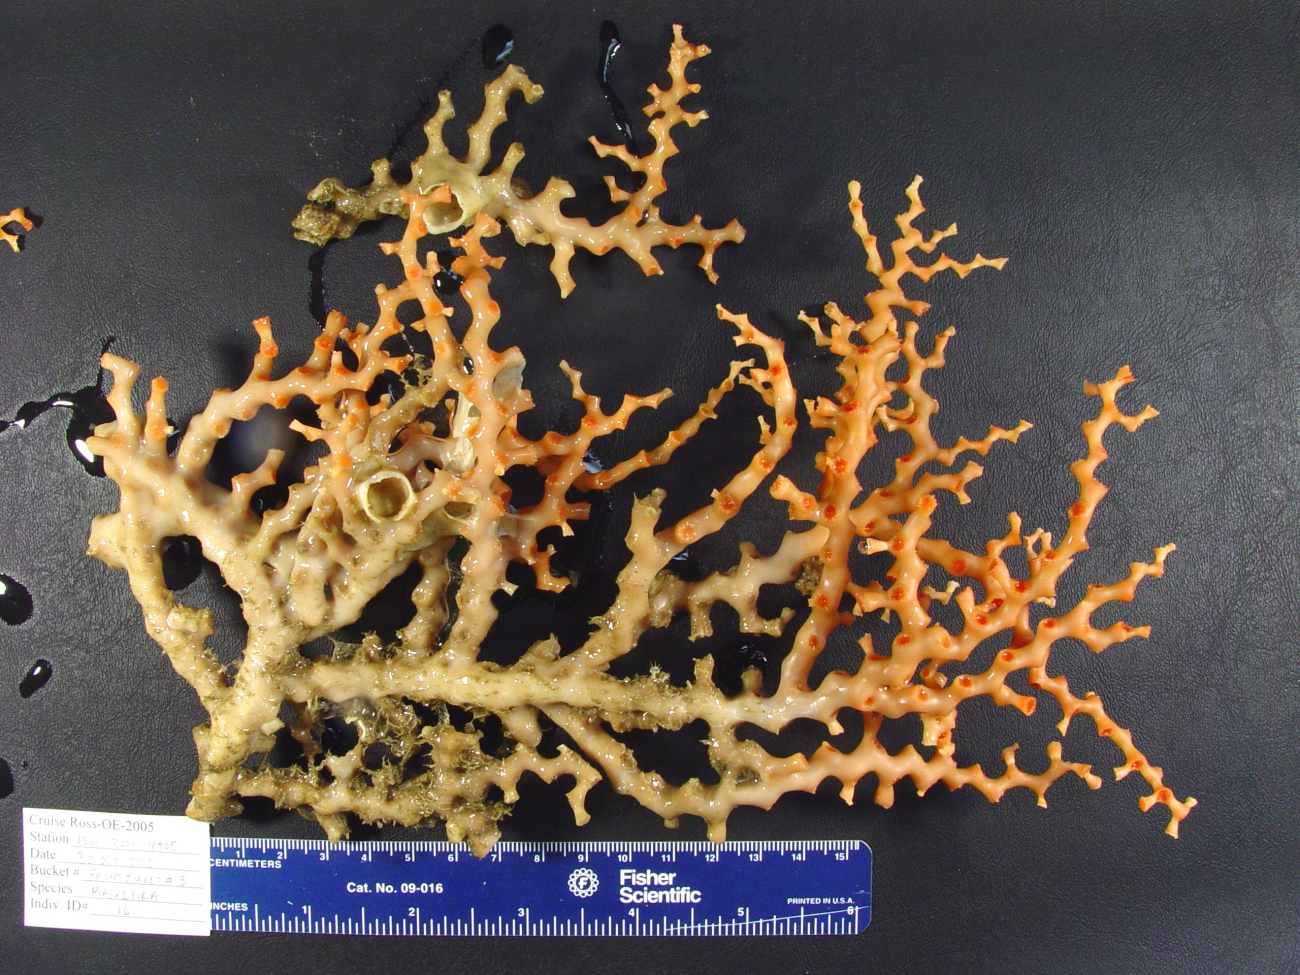 Coral of the genus Madrepora